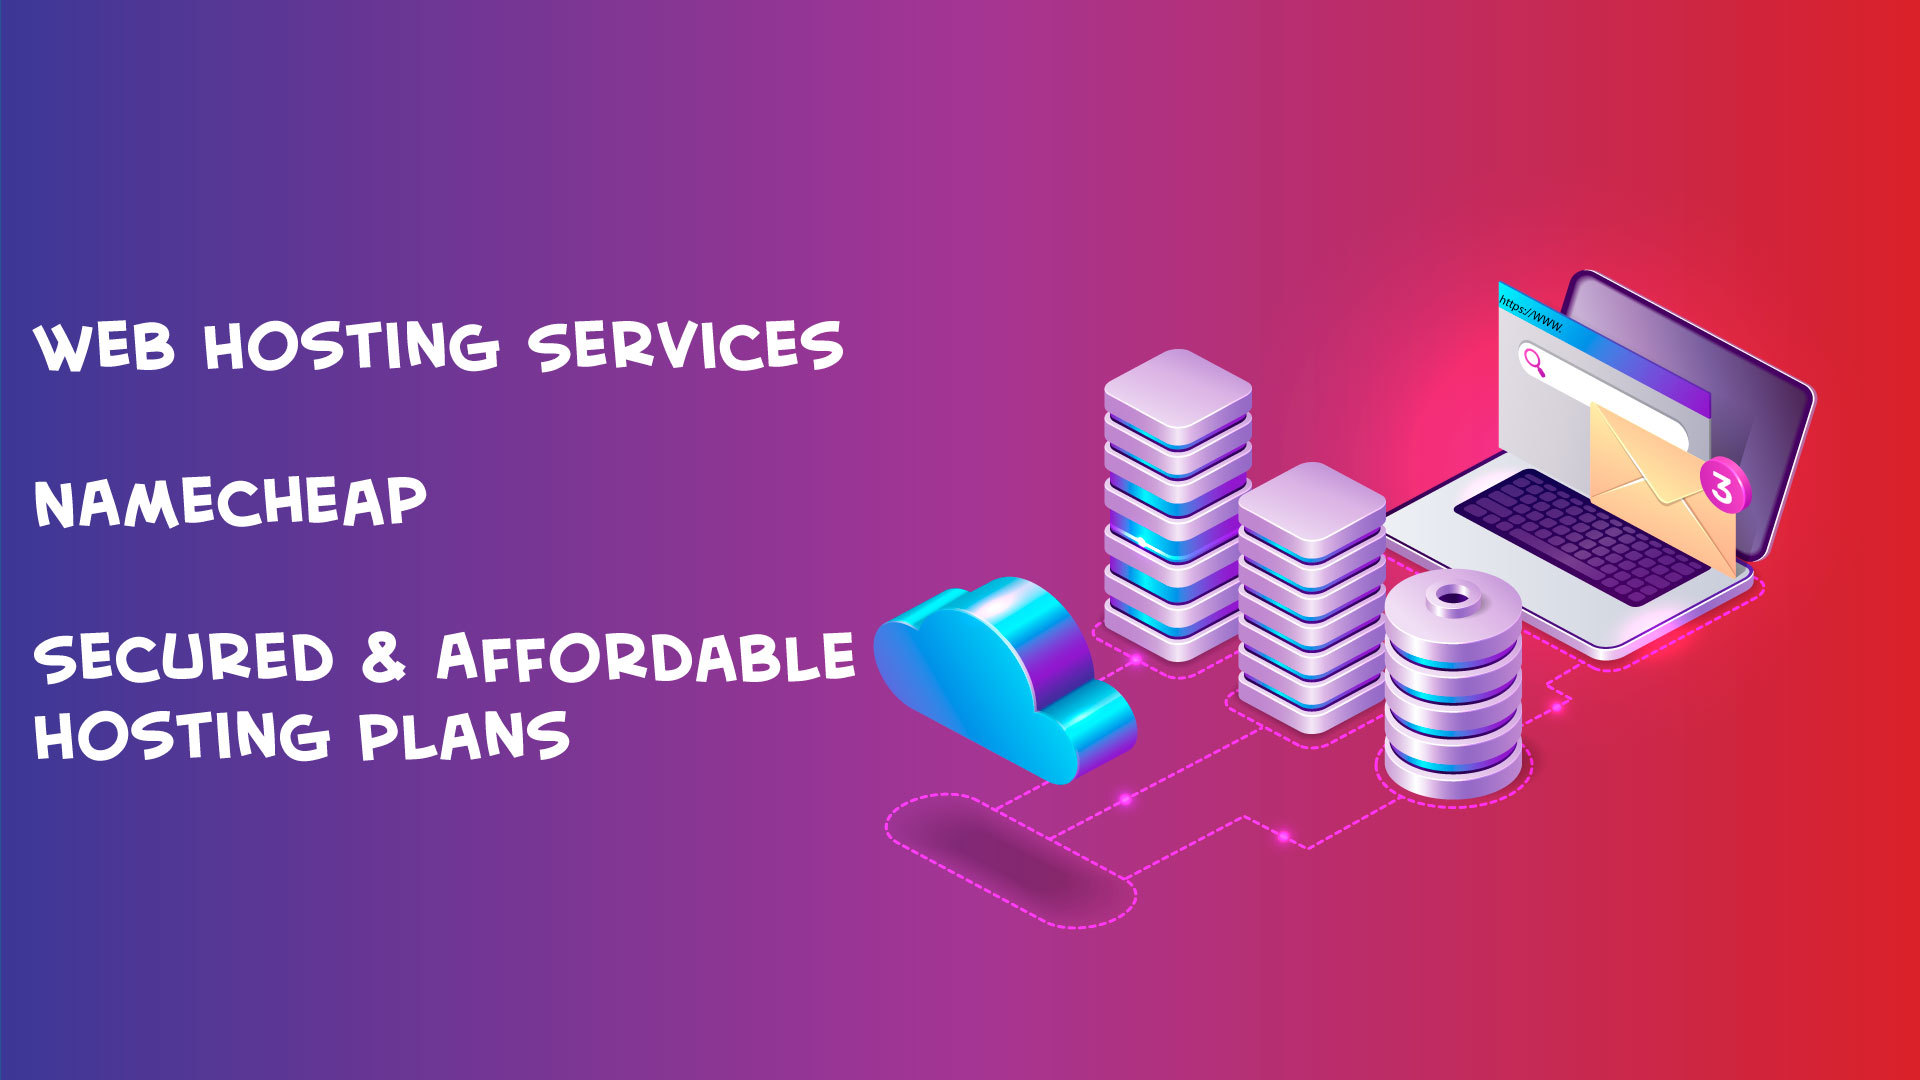 web-hosting-services-namecheap-secured-affordable-plans